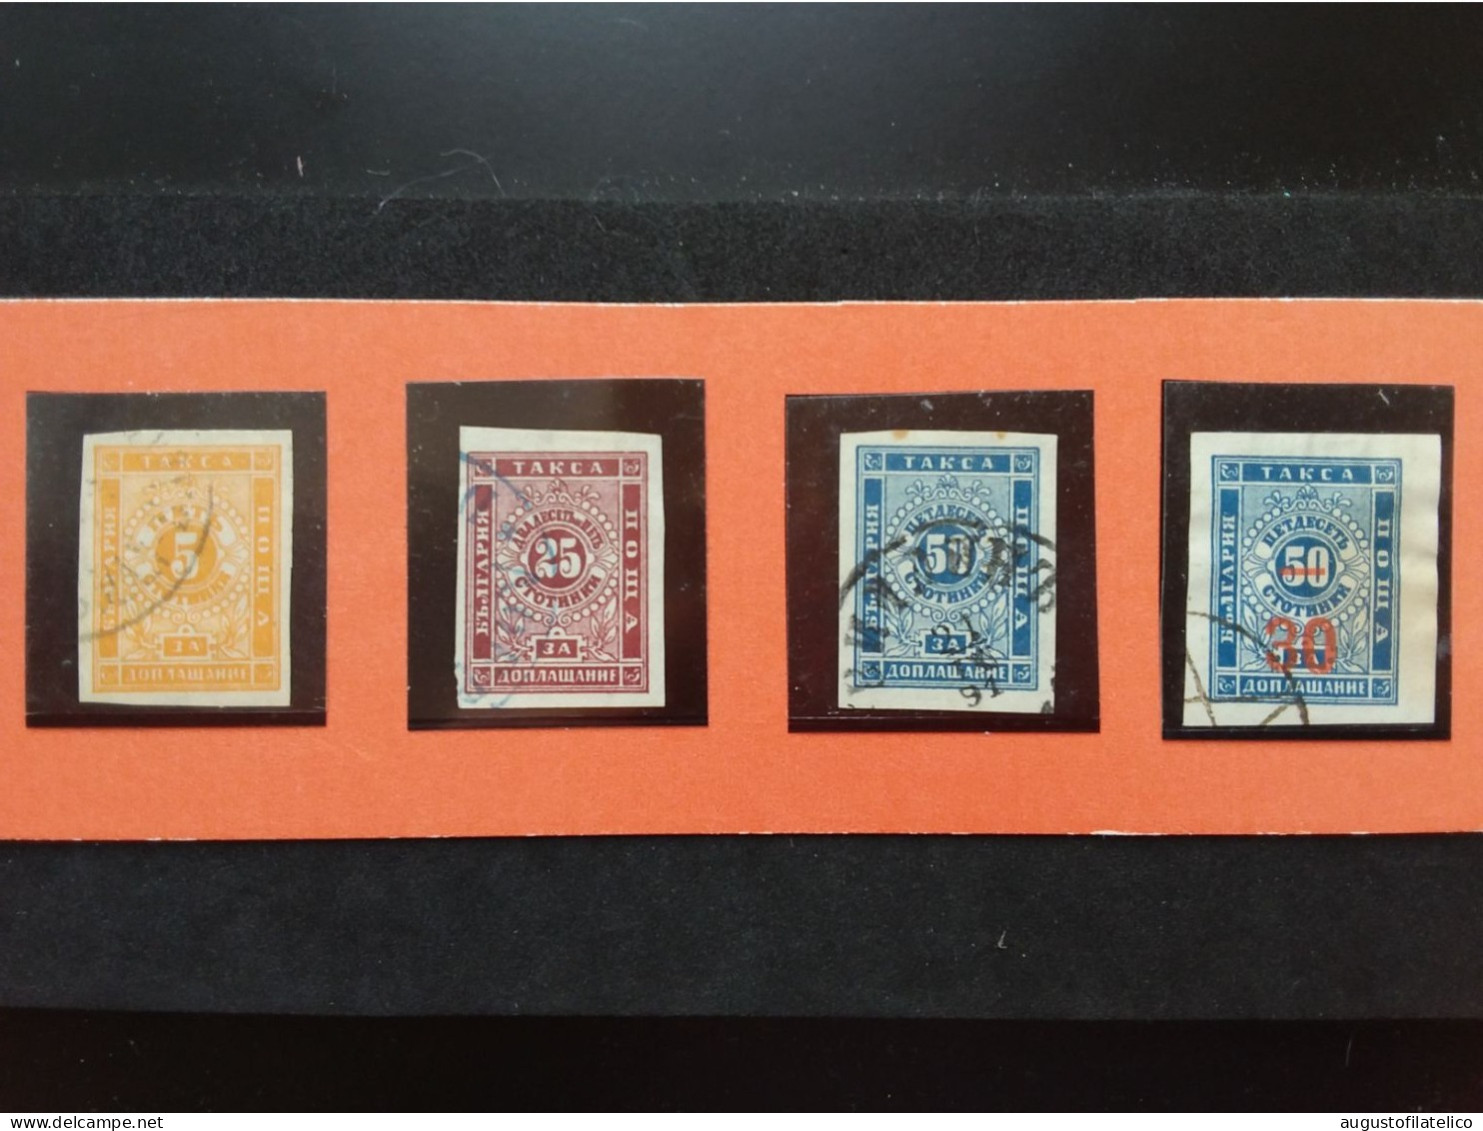 BULGARIA - Tasse - Nn. 4-5-6-11 - Timbrati + Spese Postali - Official Stamps